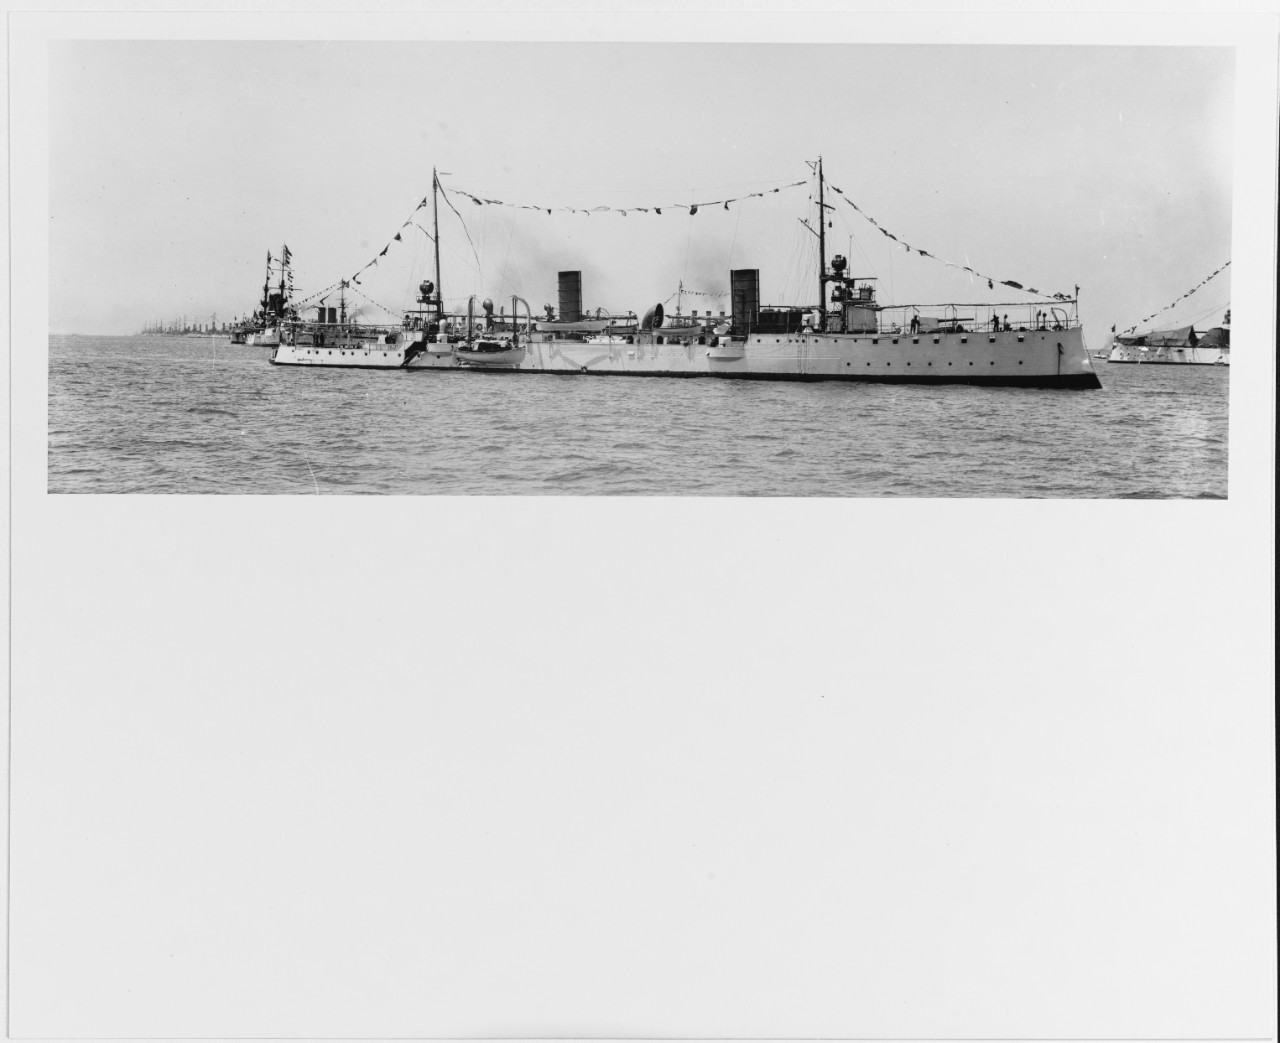 TAMOYO (Brazilian torpedo-gunboat, 1896)